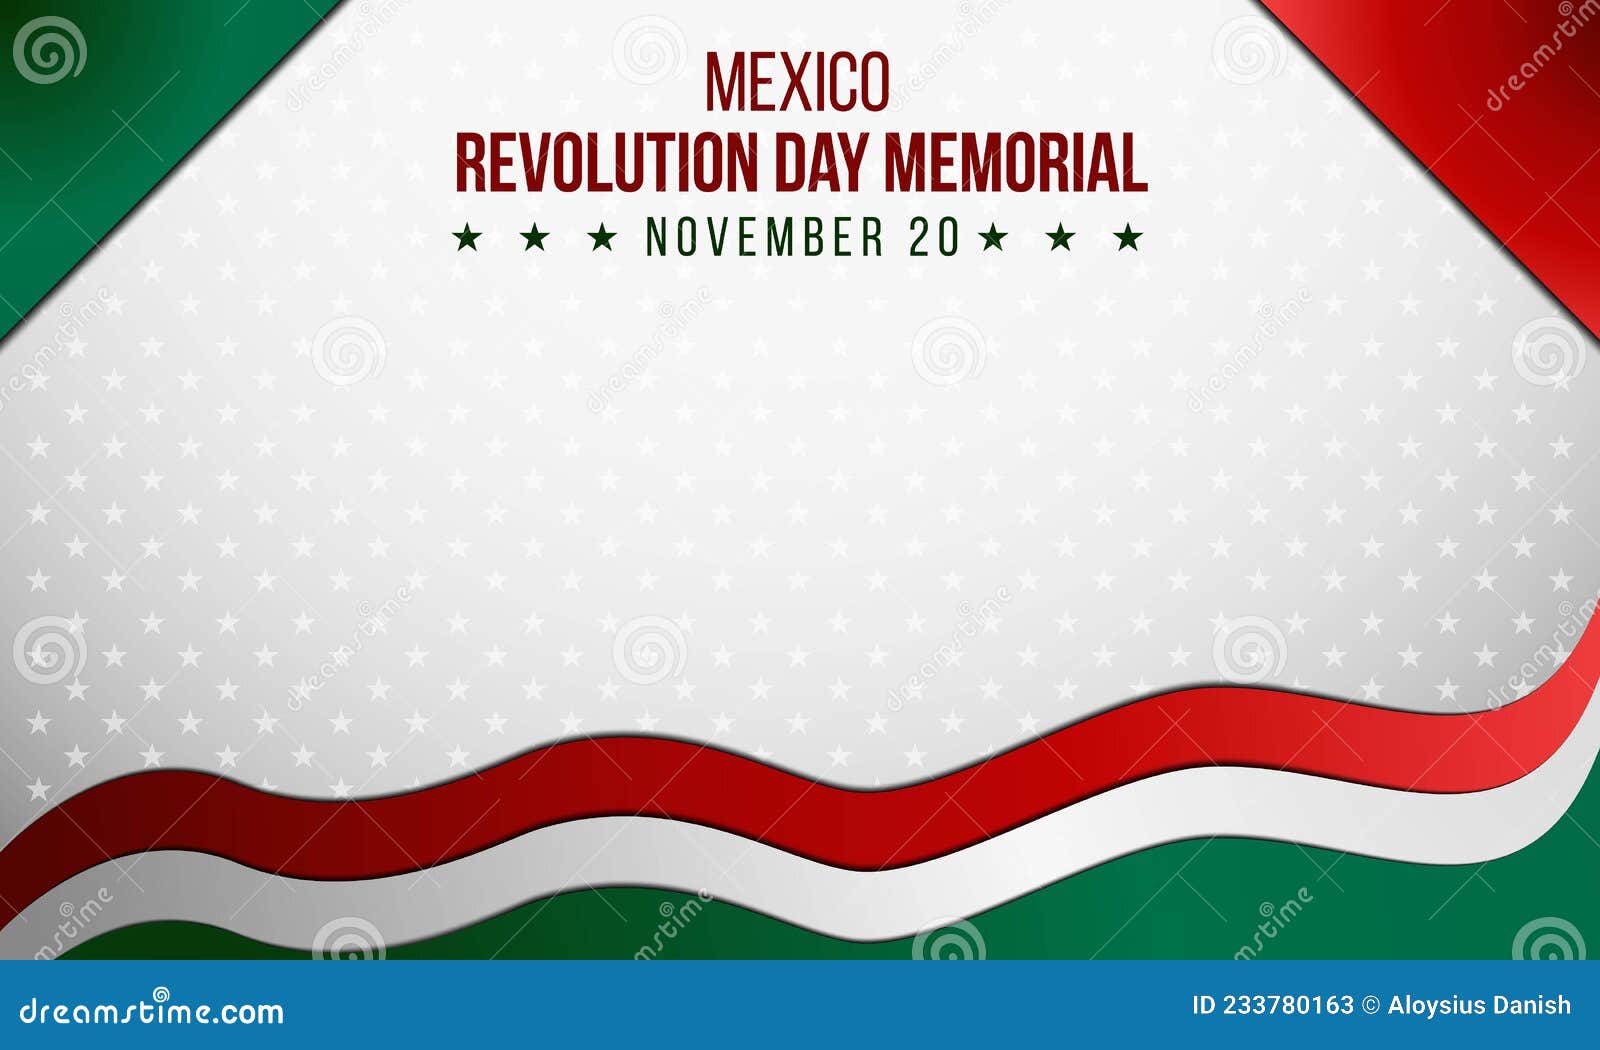 El top imagen 47 fondo revolucion mexicana